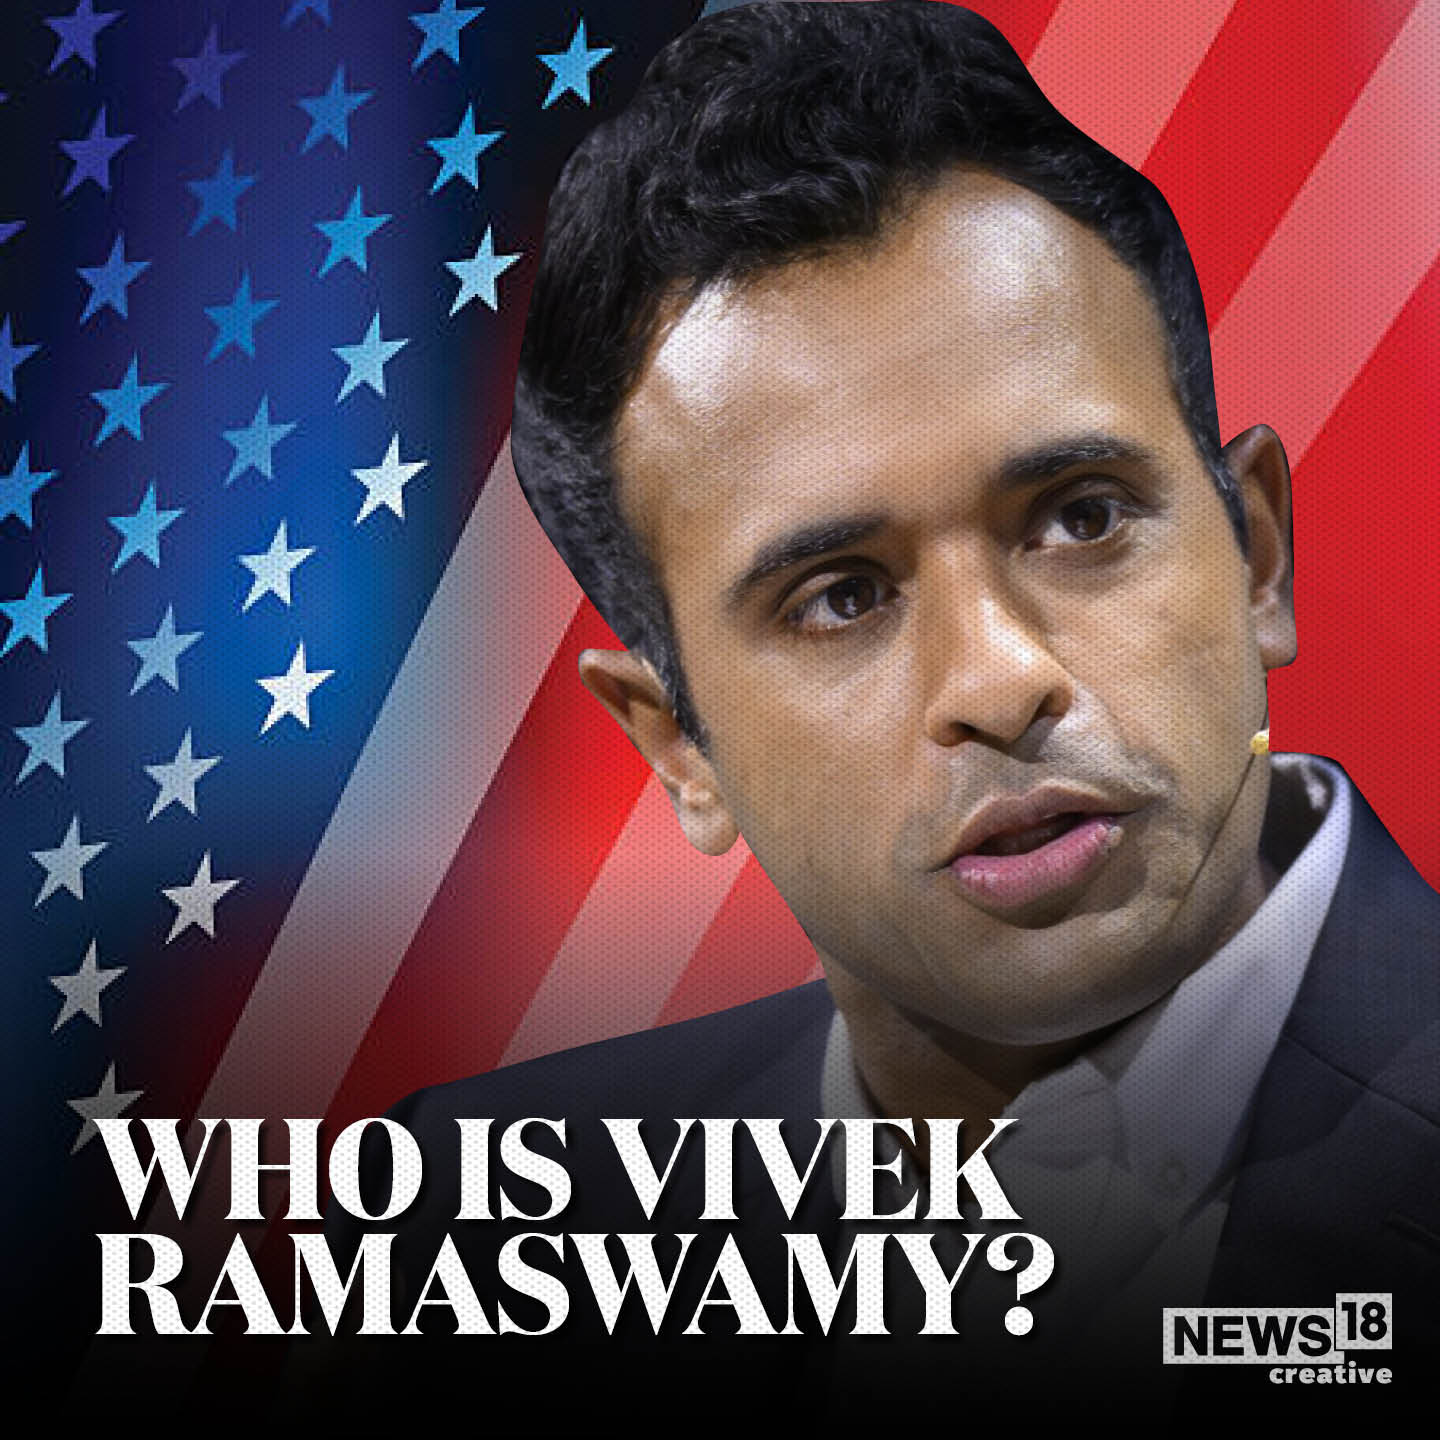 Who is Vivek Ramaswamy Indianorigin CEO, 'AntiWoke' Activist Running